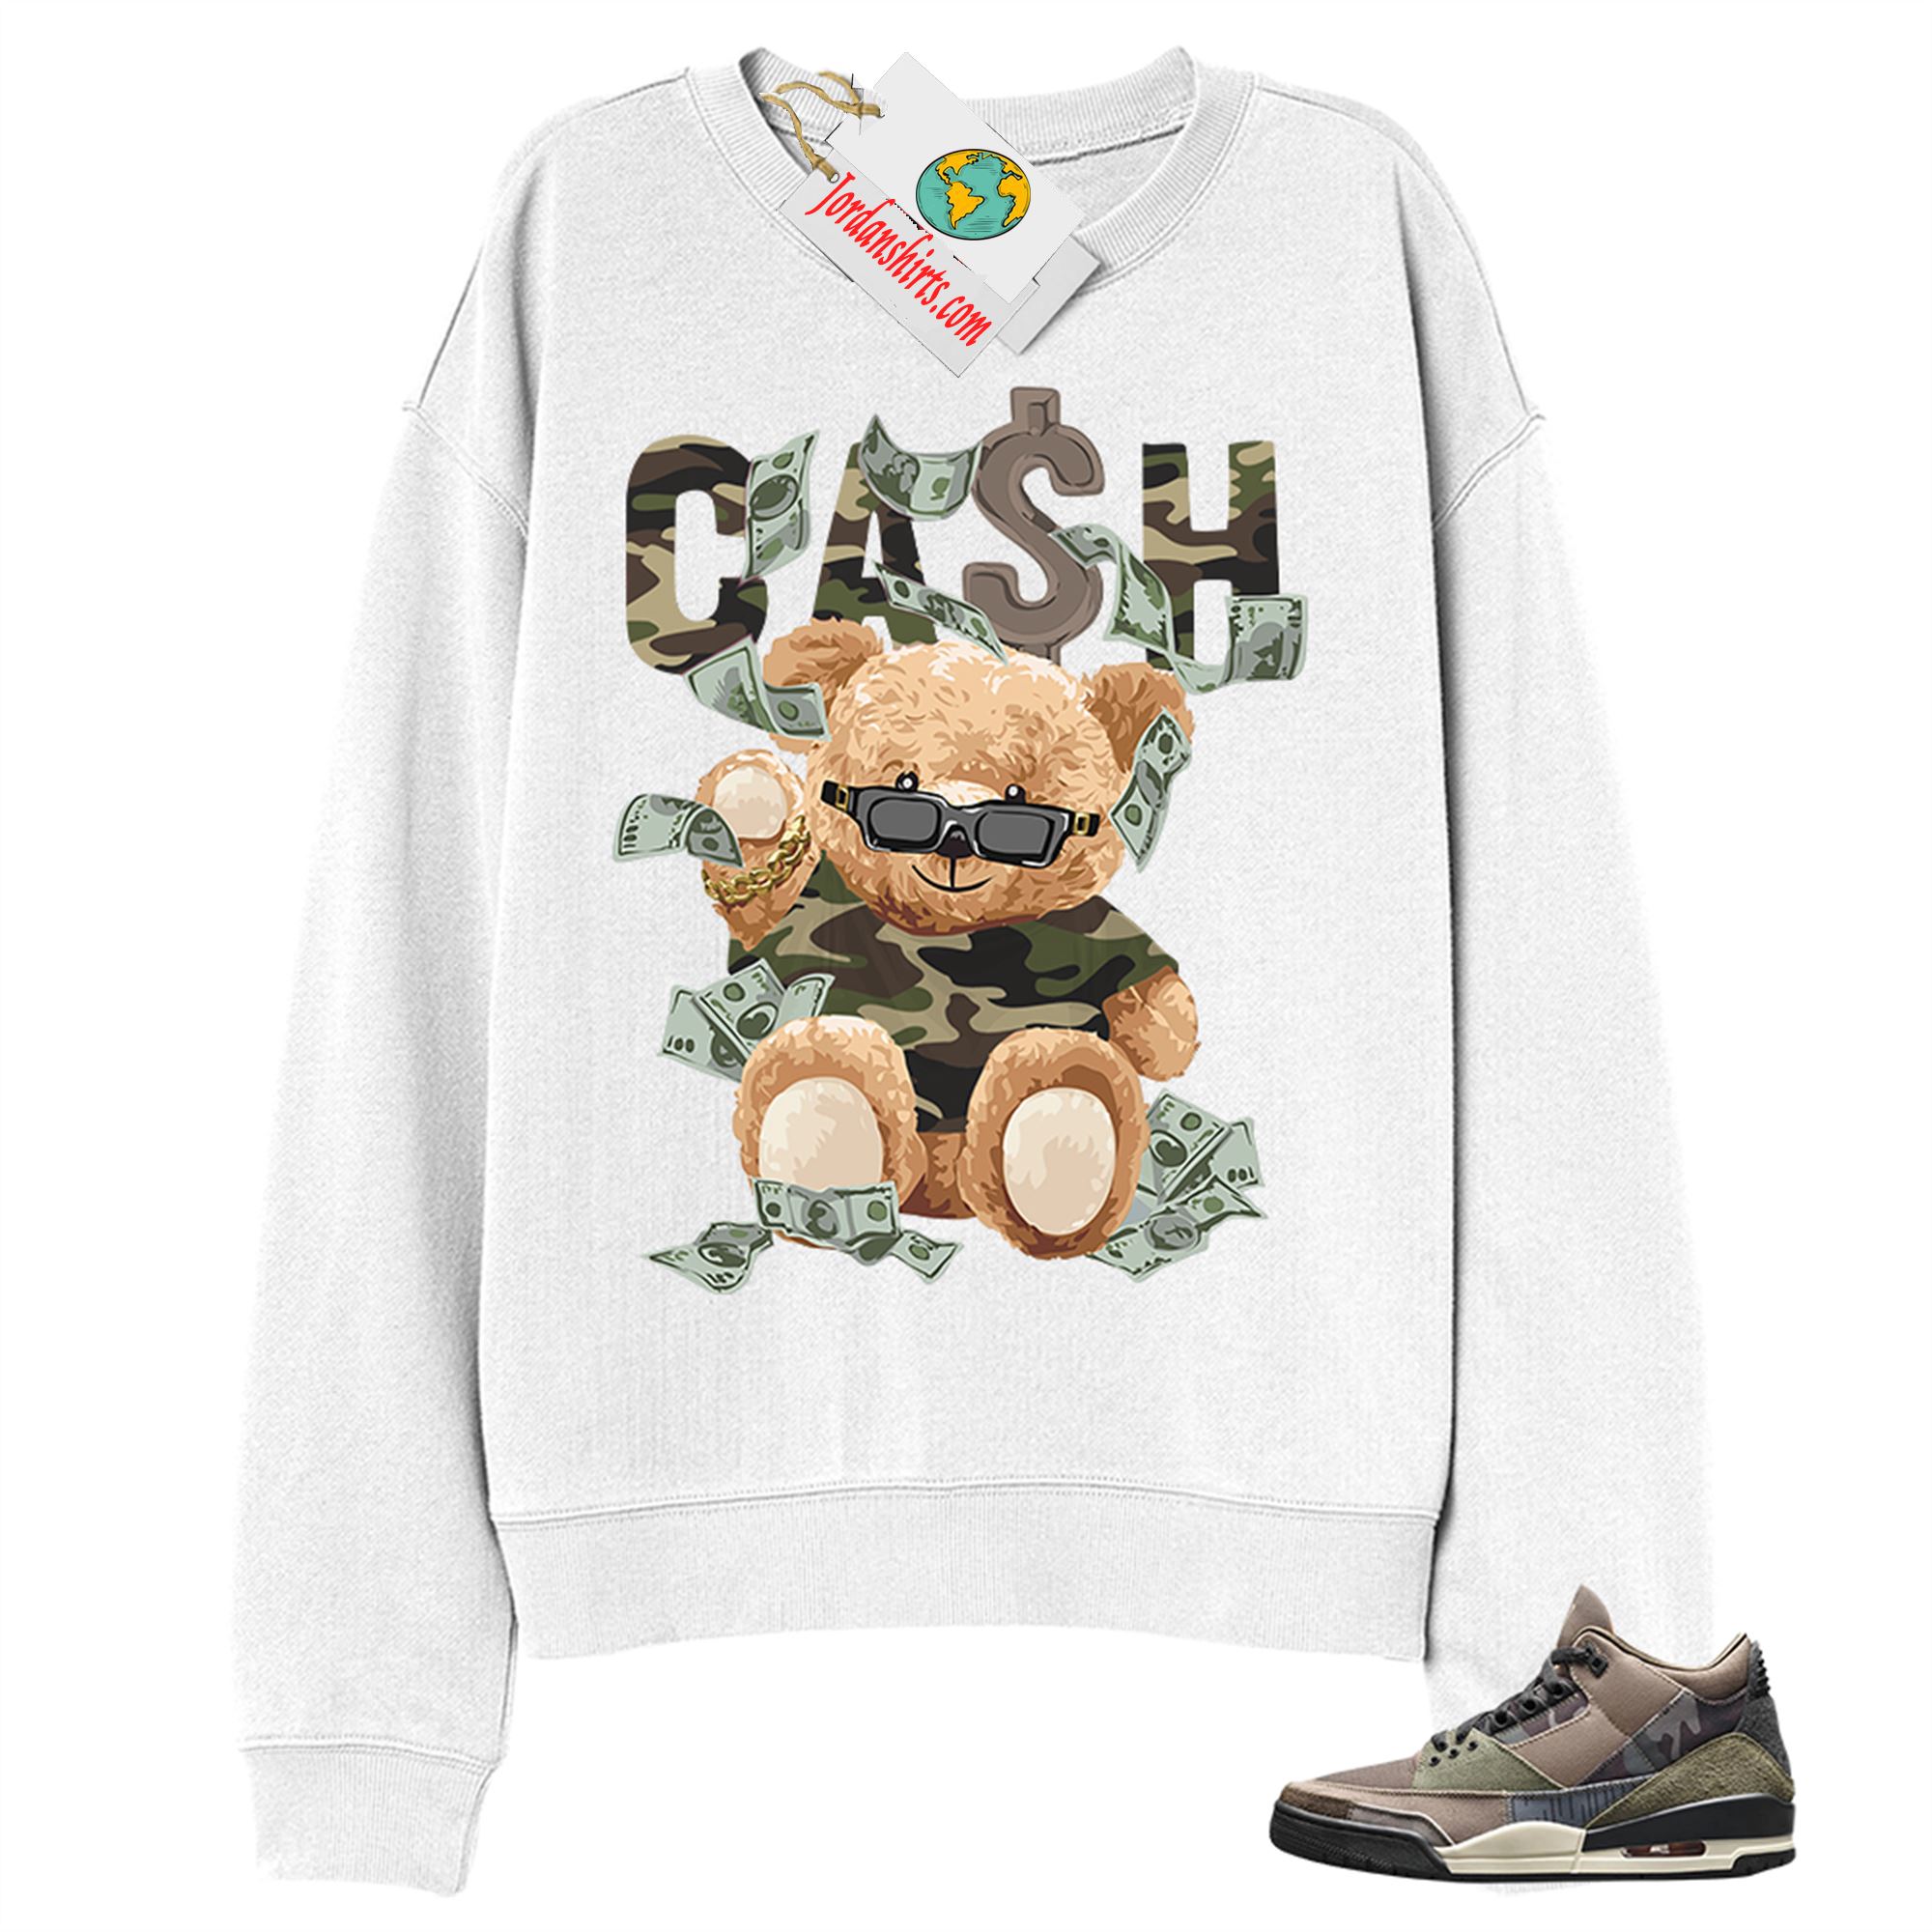 Jordan 3 Sweatshirt, Cash Teddy Bear In Sunglasses White Sweatshirt Air Jordan 3 Camo 3s Plus Size Up To 5xl